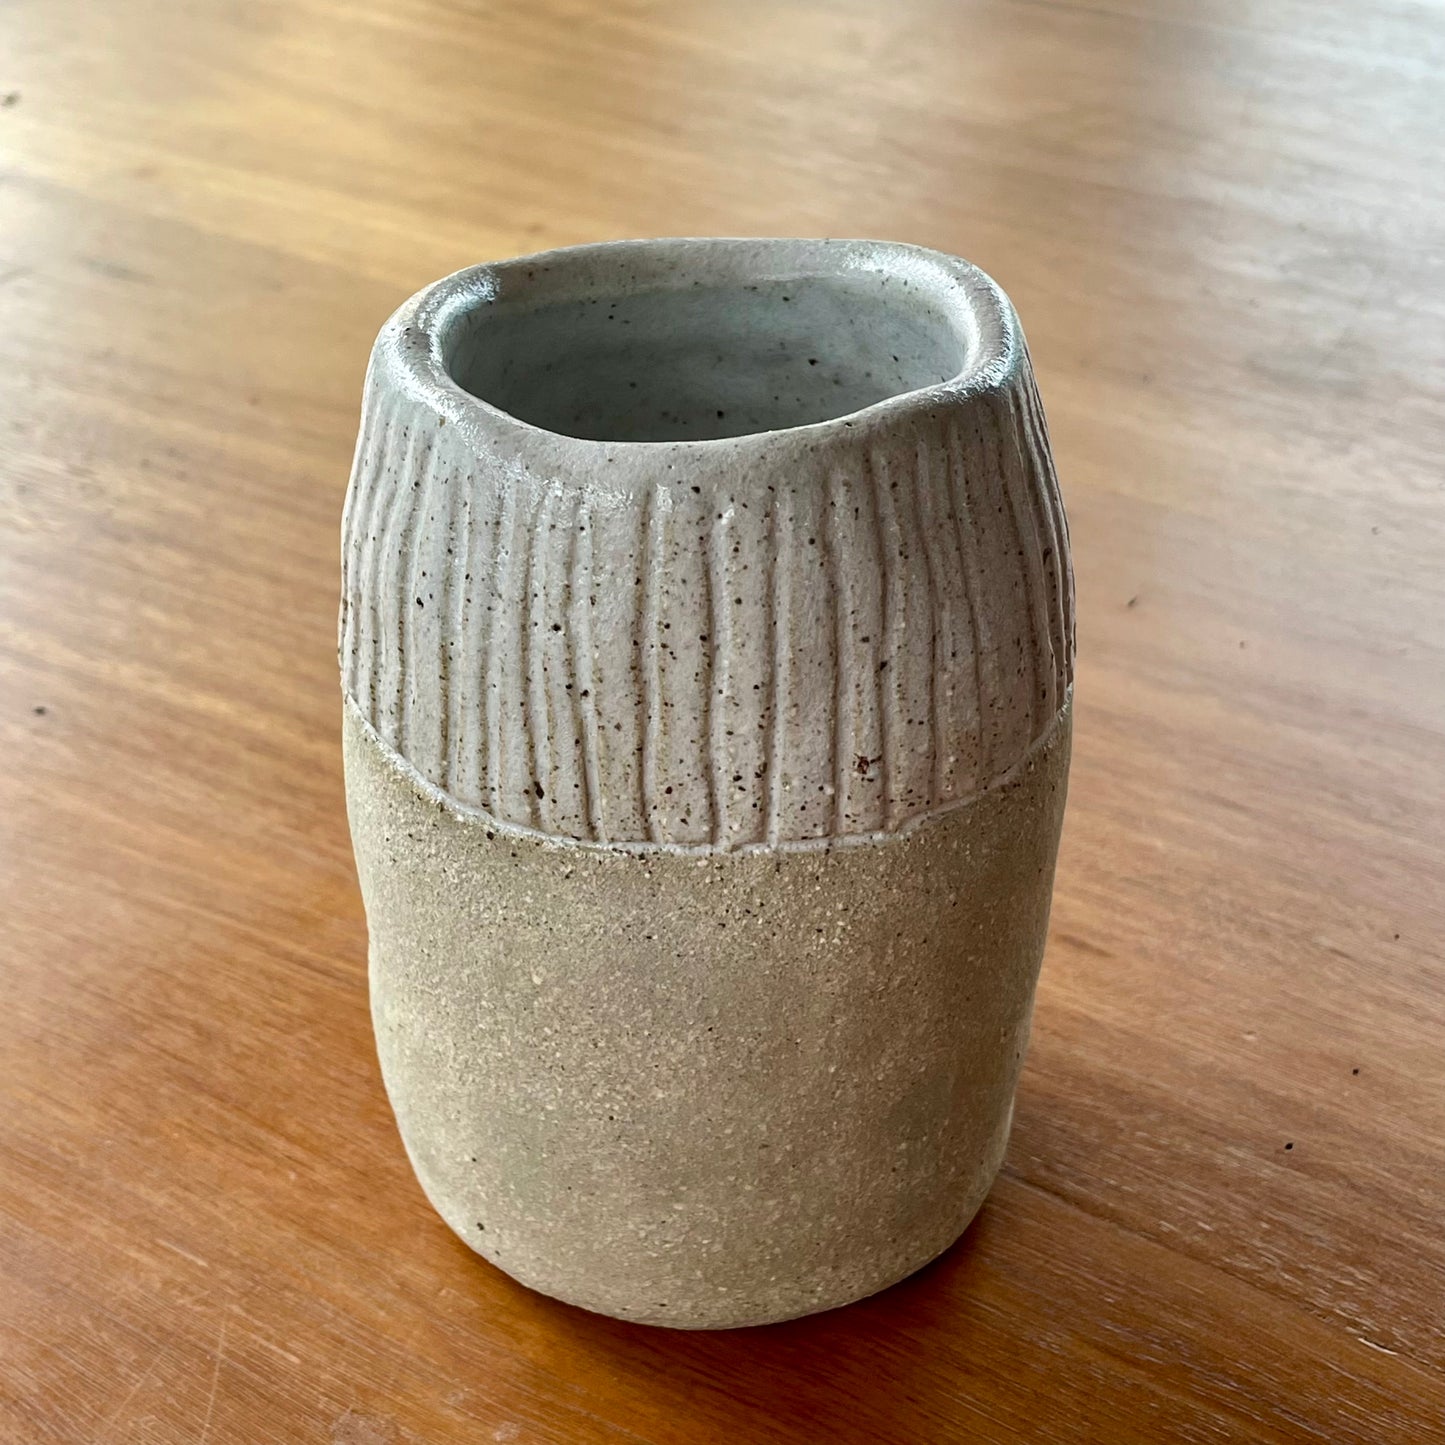 Muddy Nest - Assorted Vases